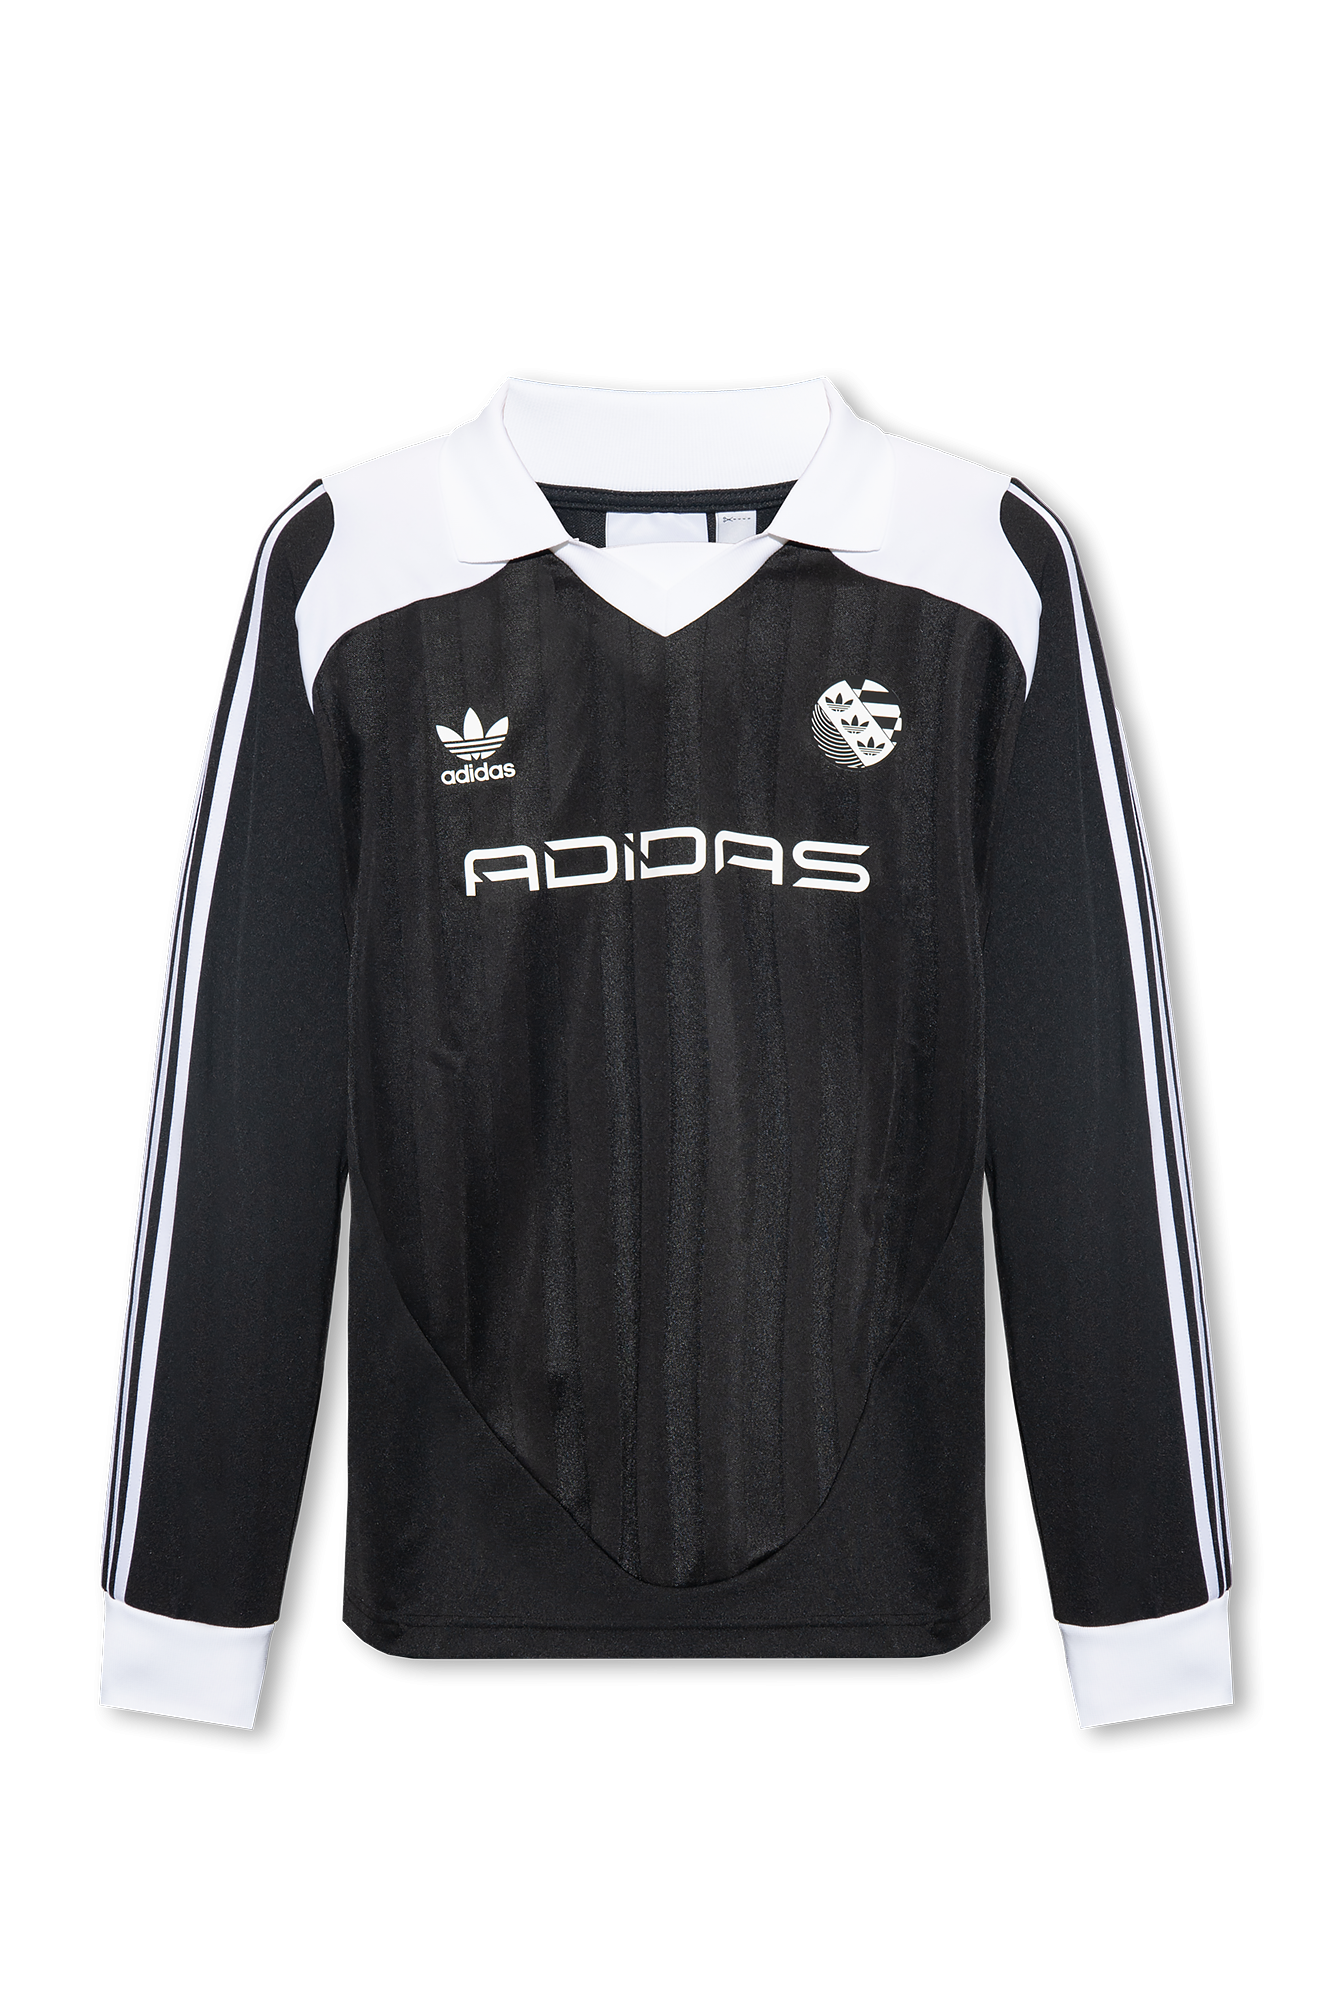 pharrell adidas - hvid lyserod Black T shirt williams dame db2558 IetpShops Moldova with tennis - Originals hu ADIDAS - originals logo